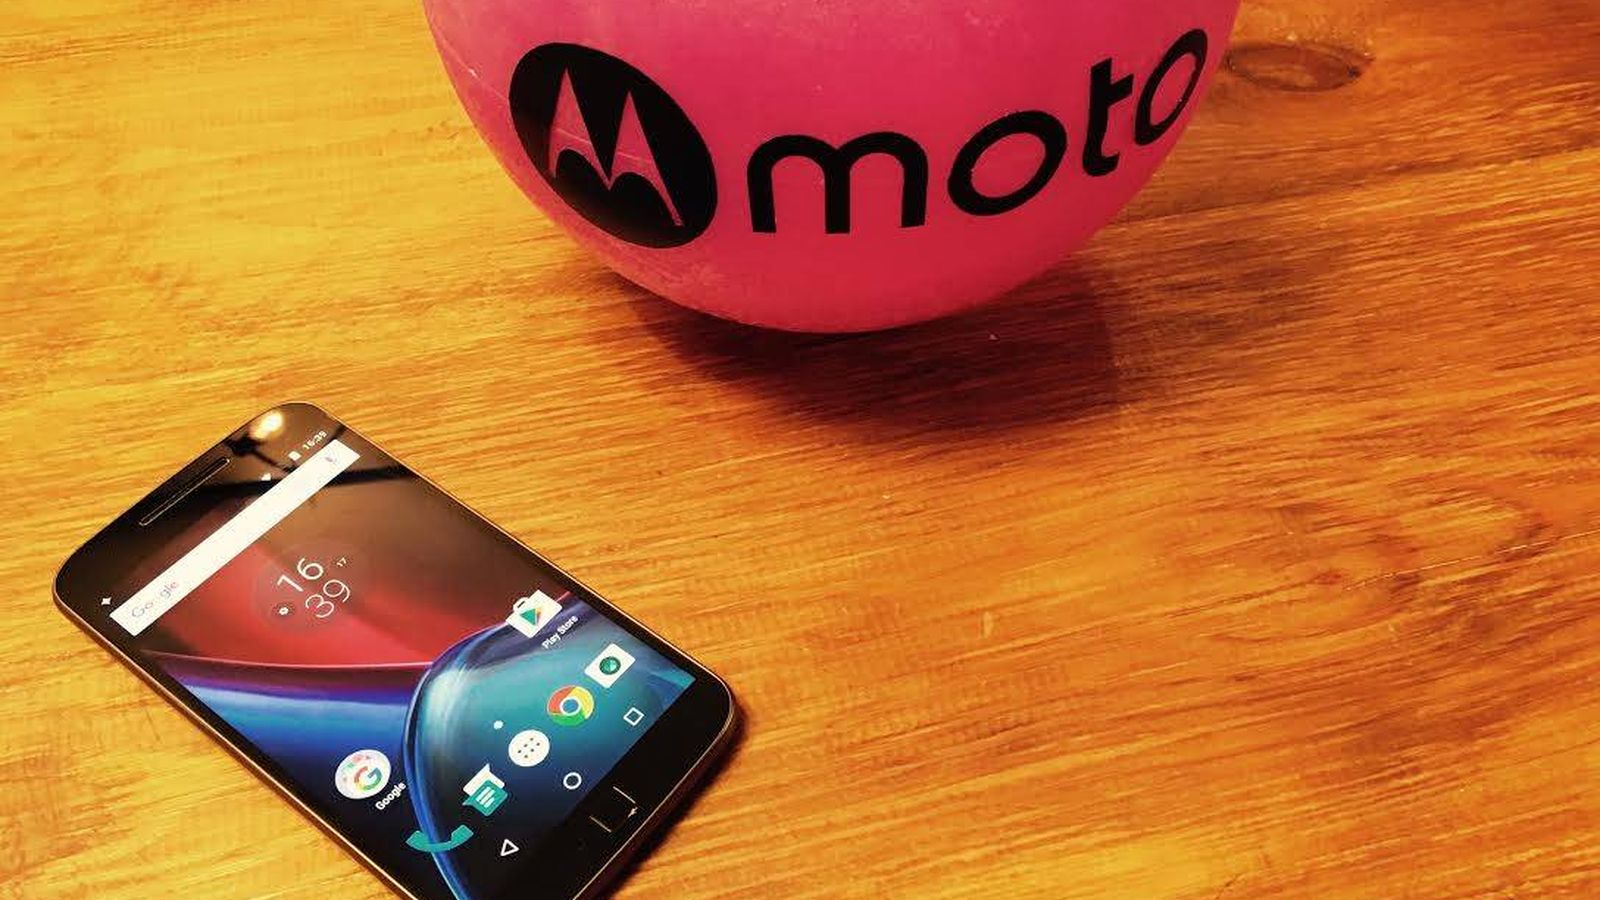 Foto: El Motorola Moto G4 llega a España a mediados de junio. (J. E.)